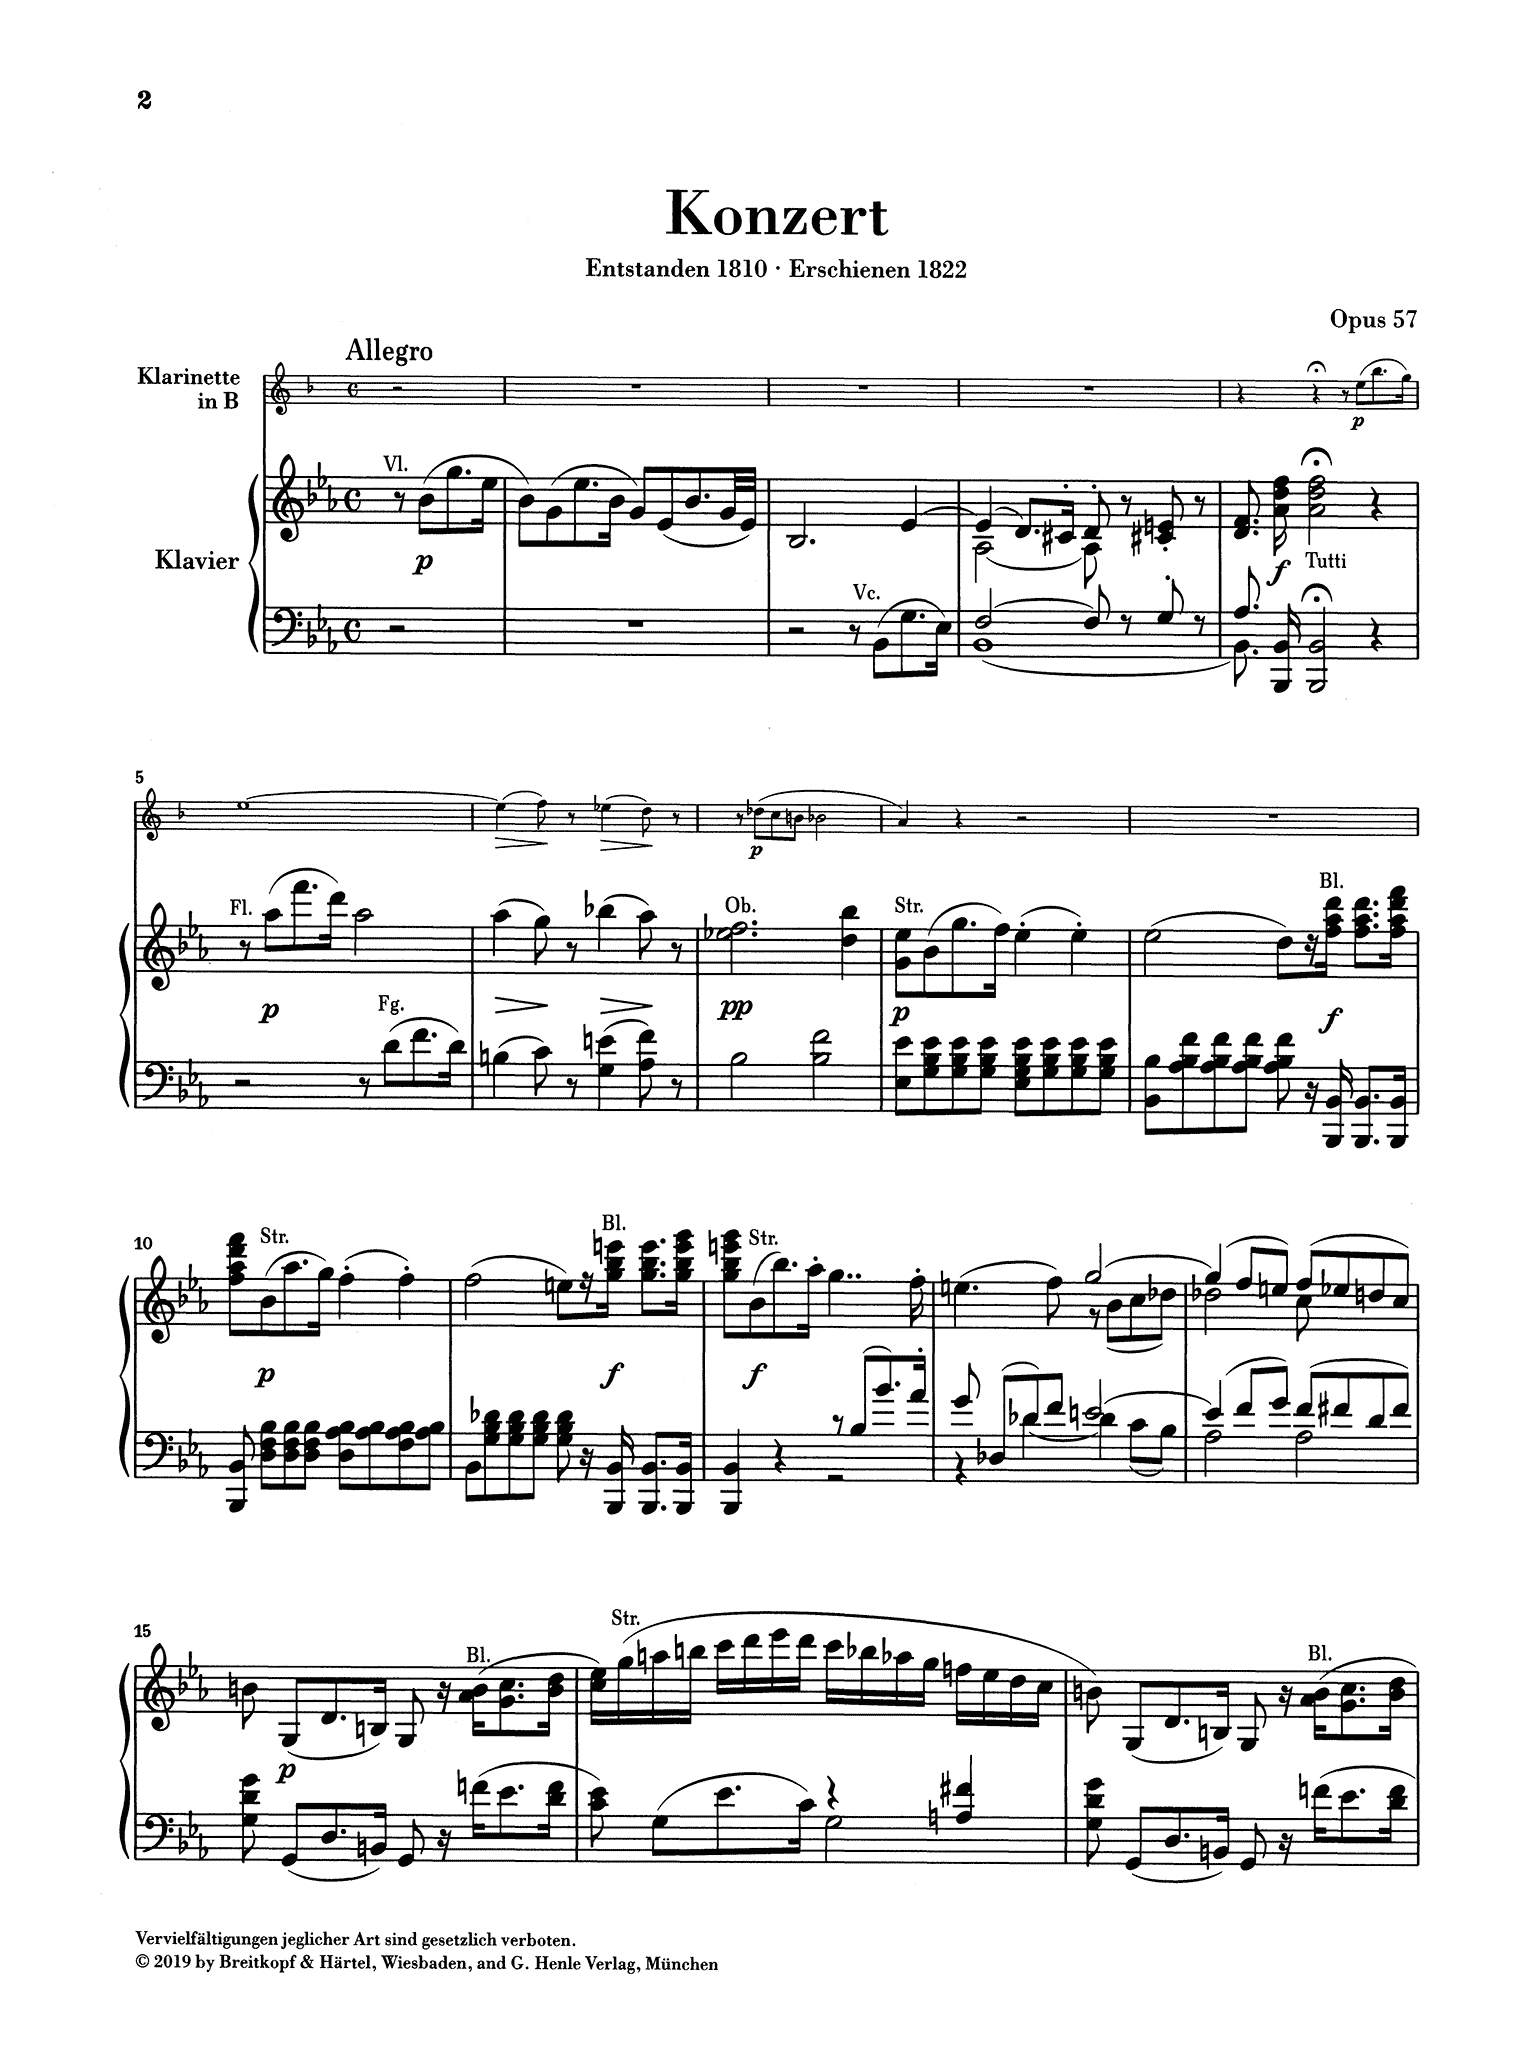 Clarinet Concerto No. 2 in E-flat Major, Op. 57 - Movement 1